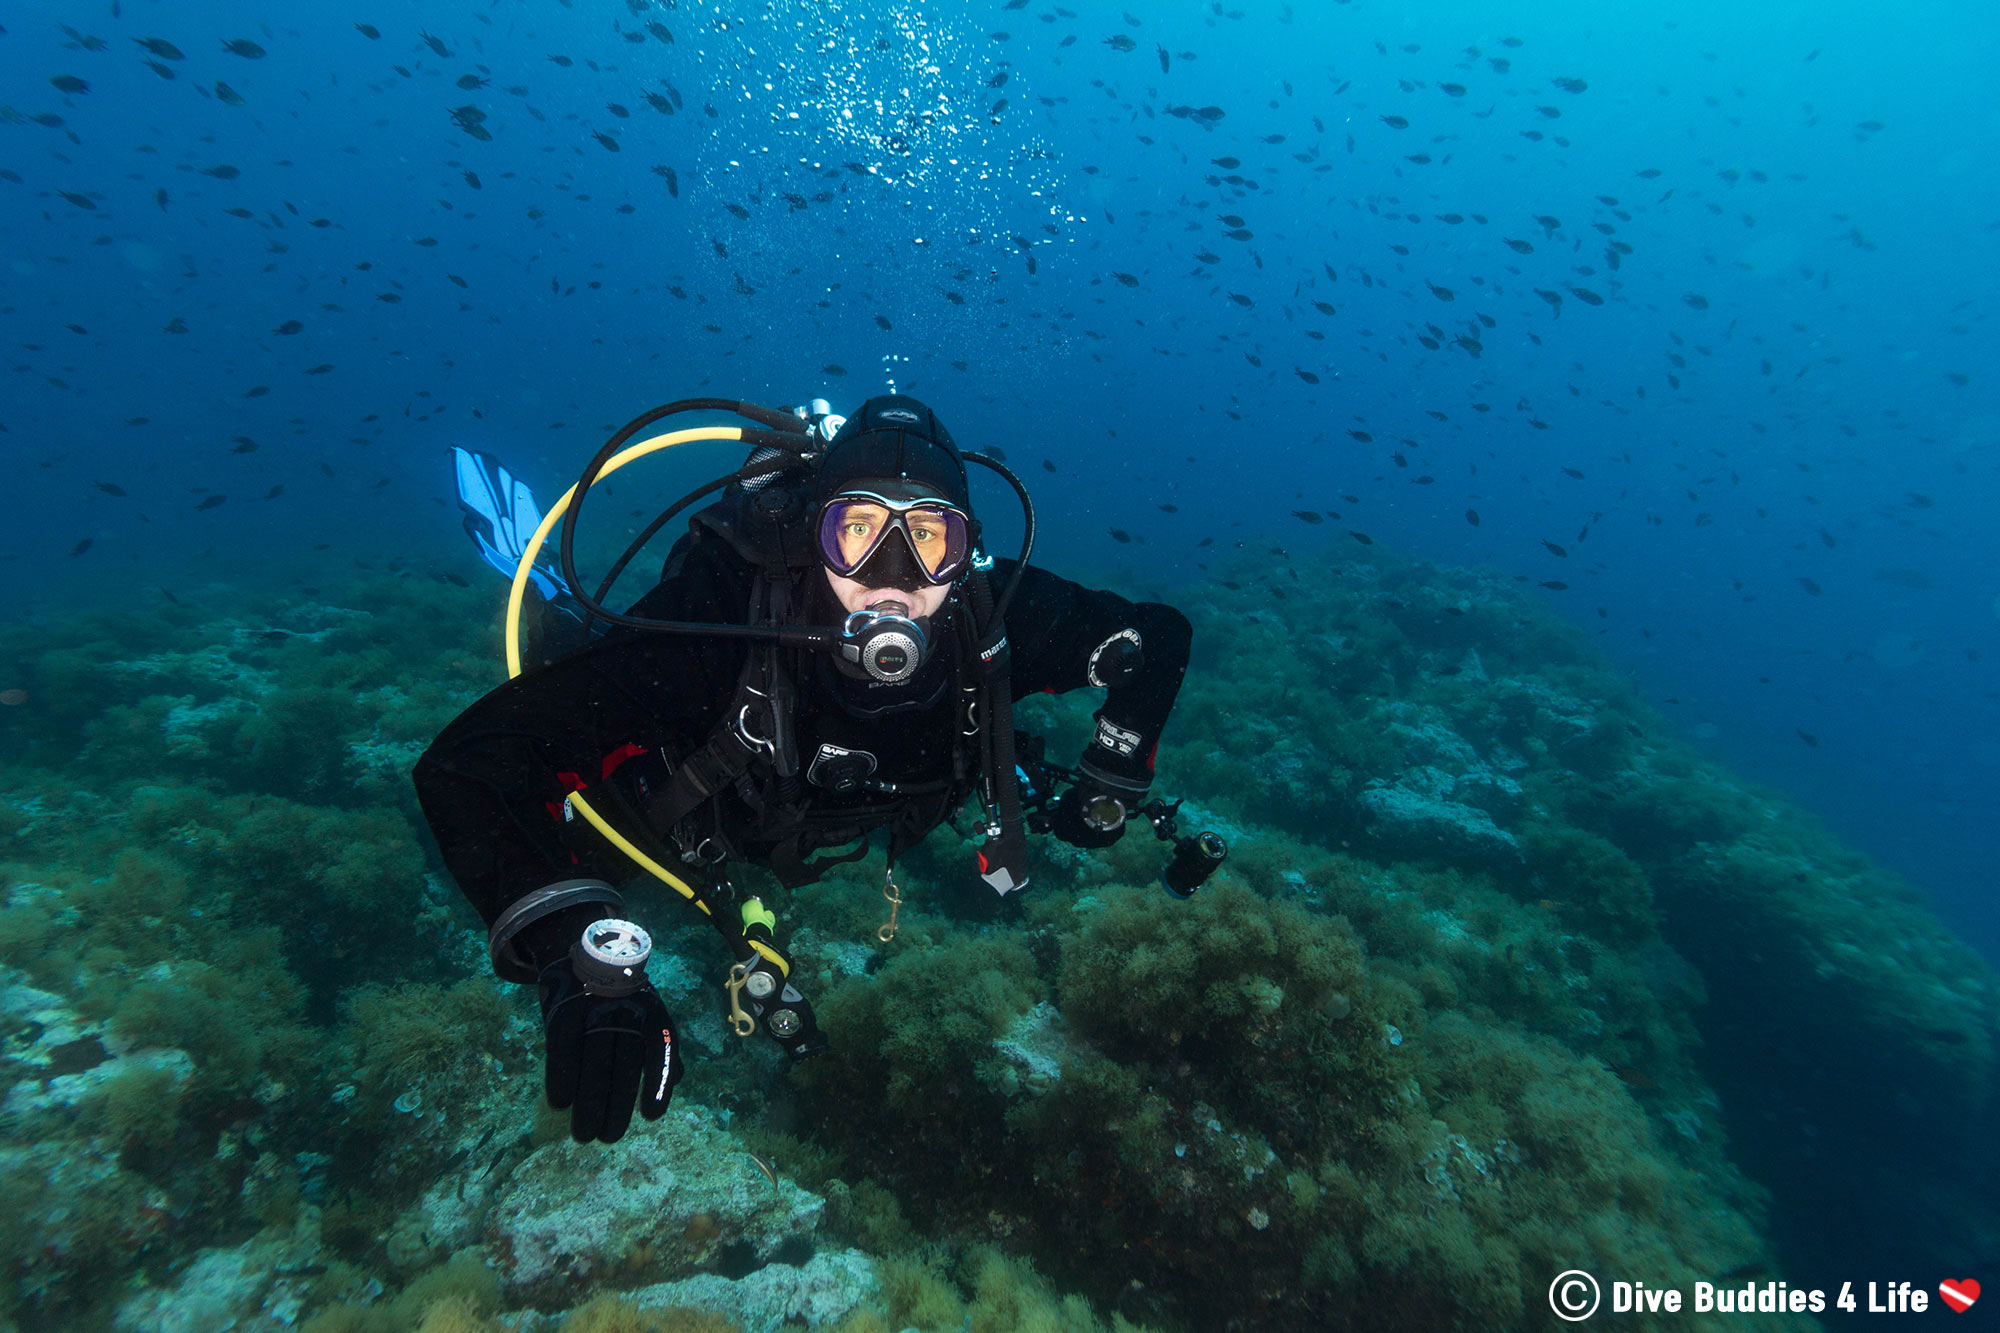 Joey Scuba Diving In The Ocean In Spain, European Diving Adventures